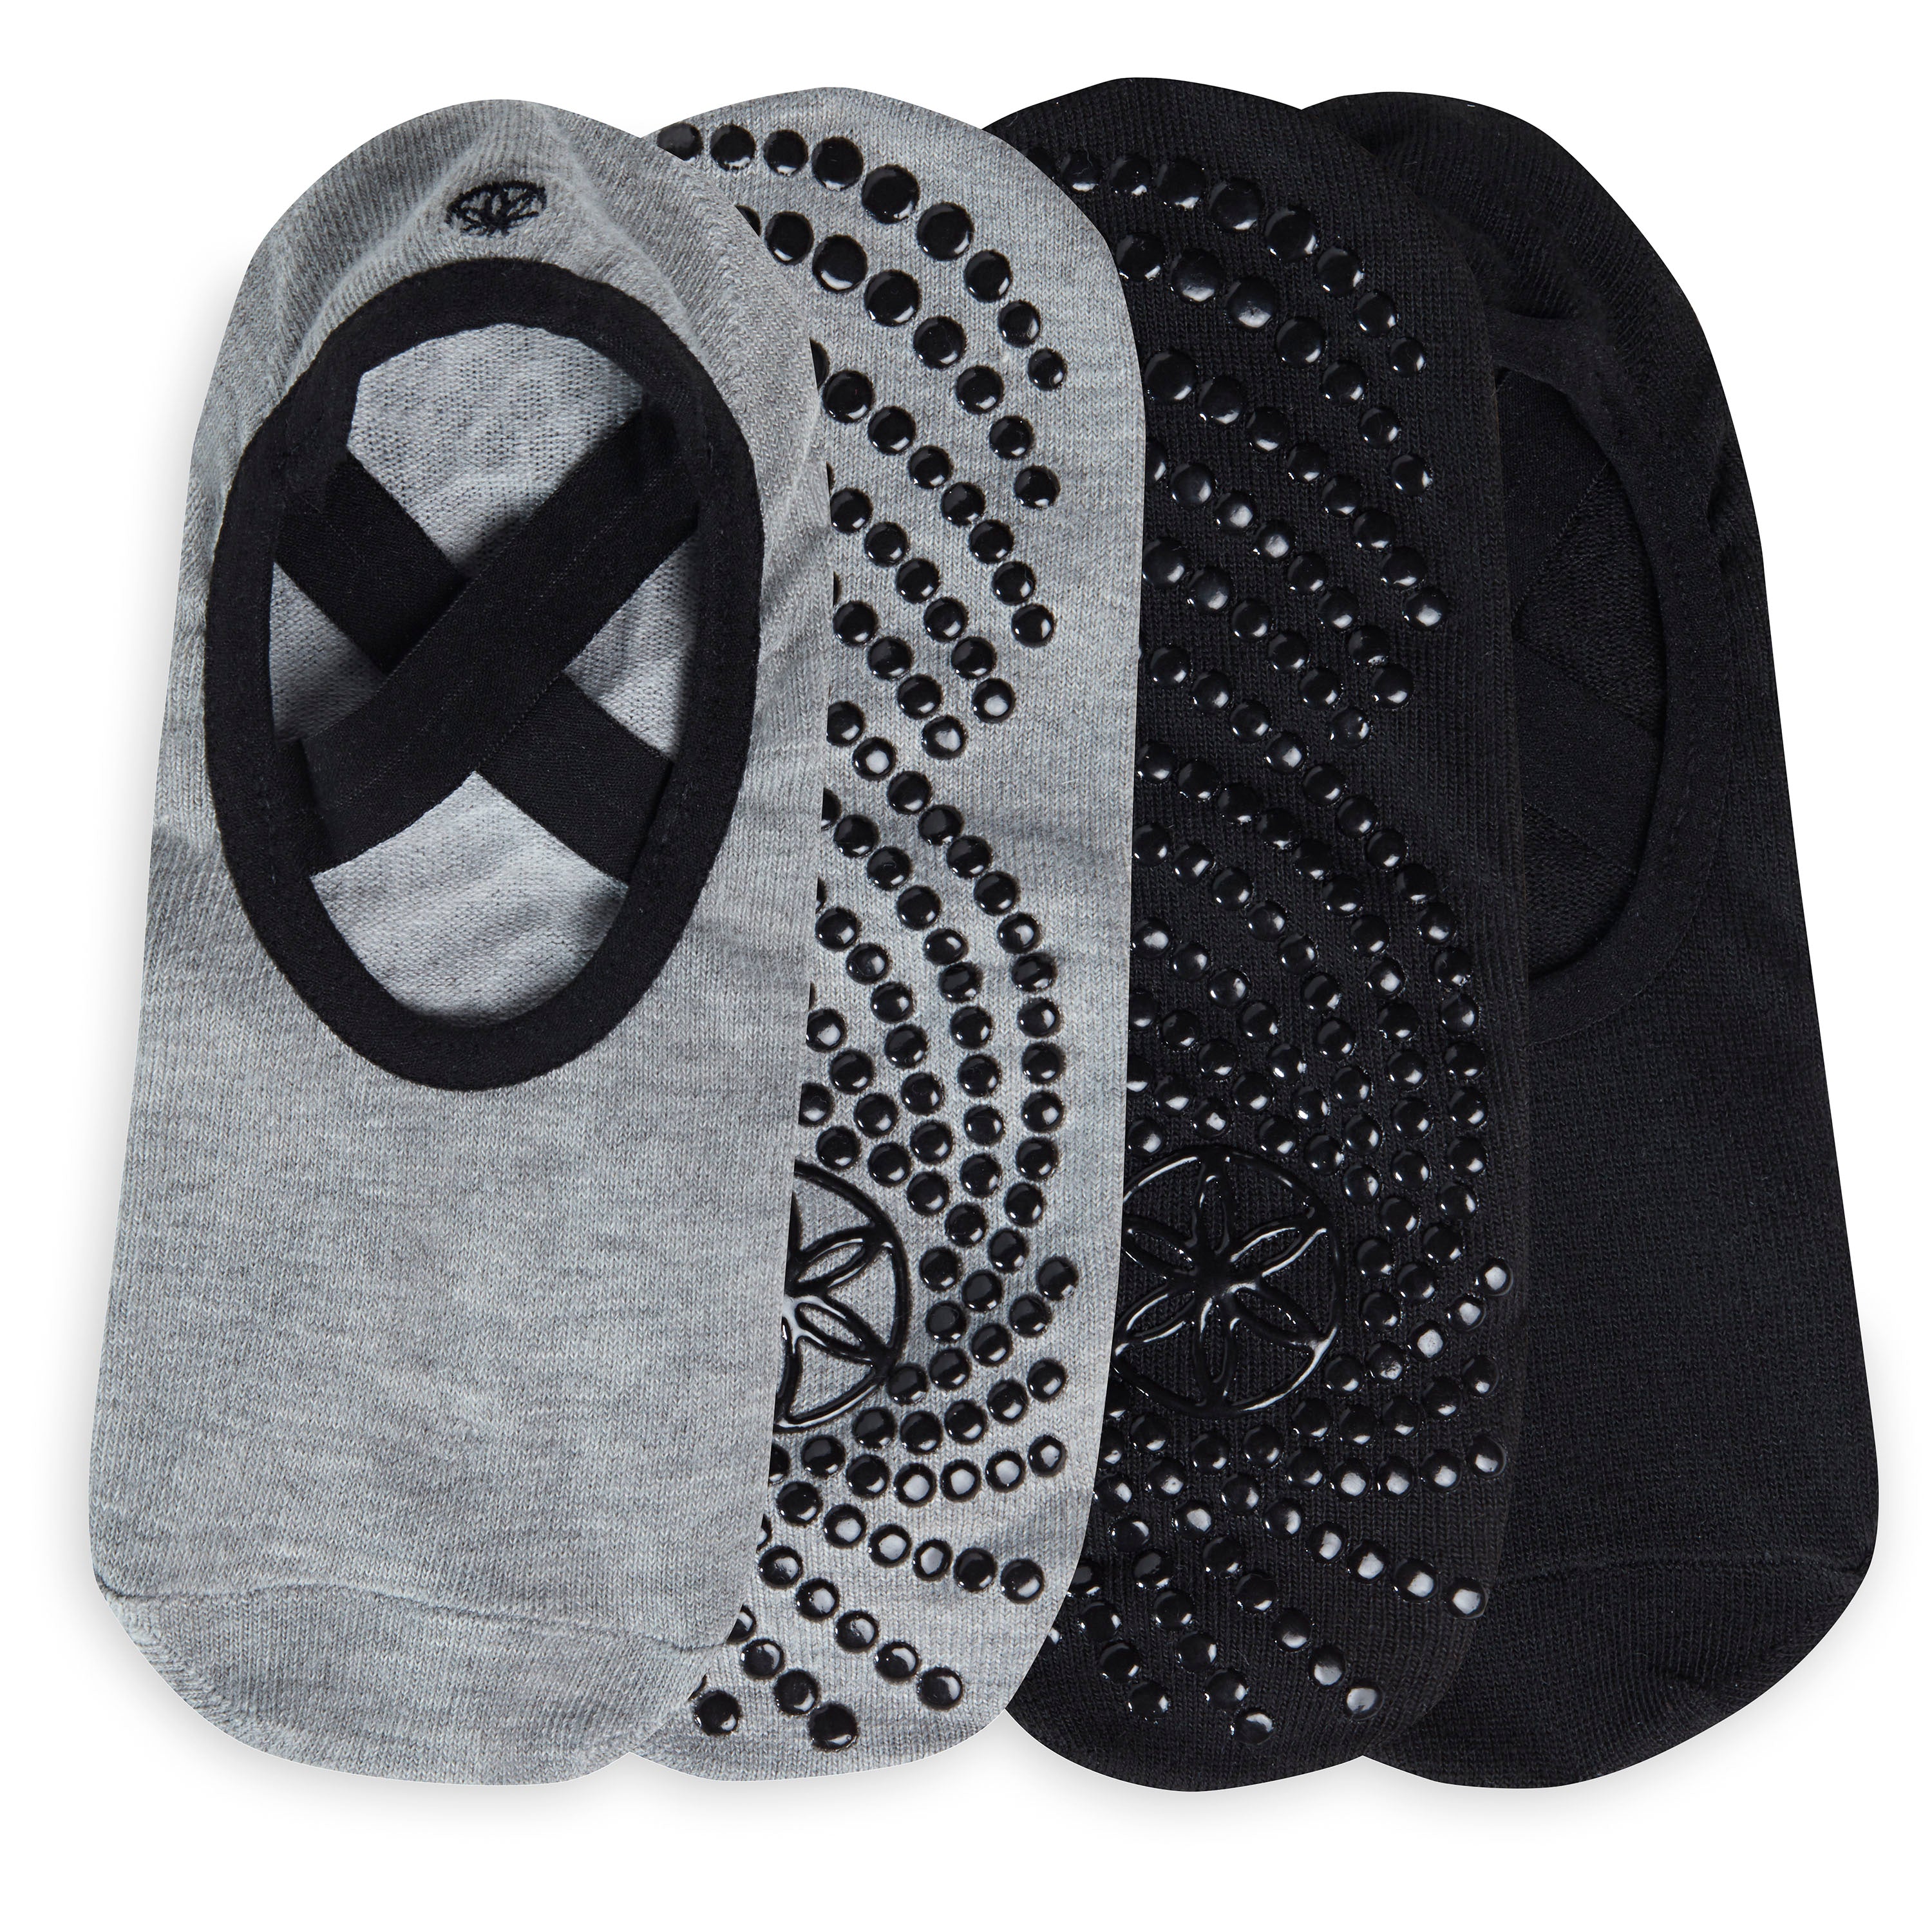 Yoga Headbands - Women's Yoga Socks, Gloves, Accessories - Gaiam